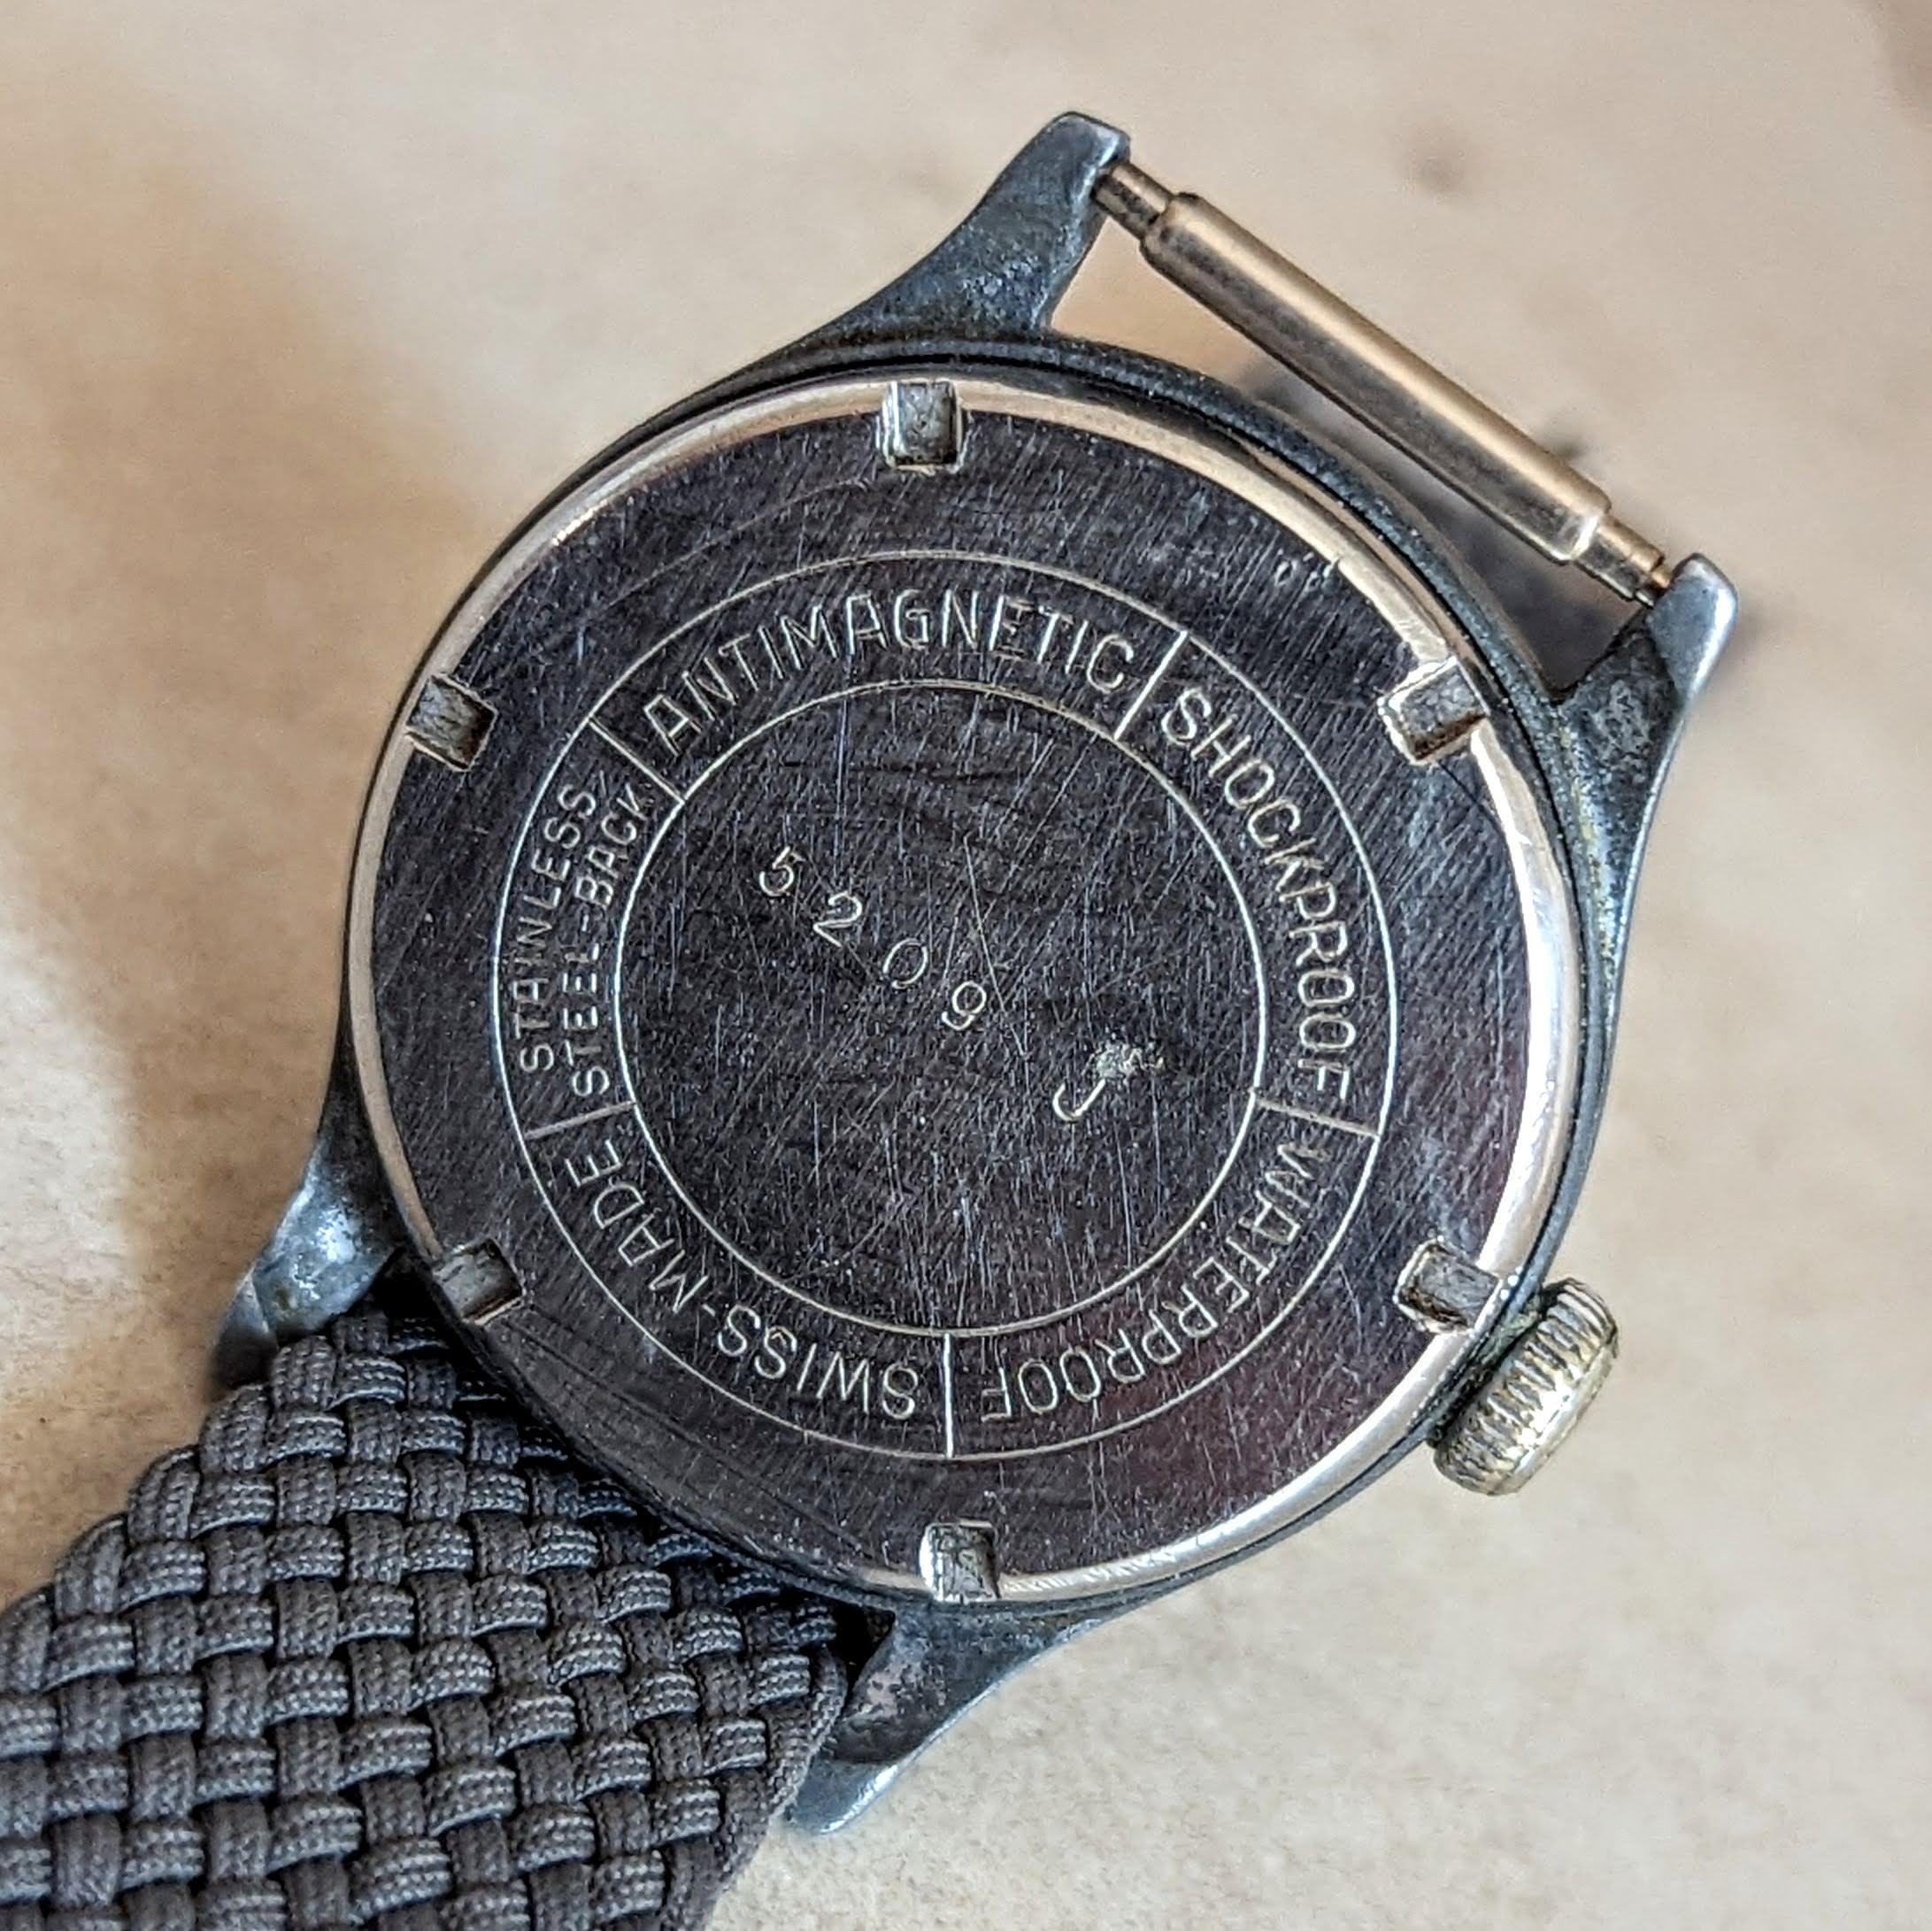 HERLIS Waterproof Military Wristwatch 17 Jewels Anti-Magnetic Swiss Made Watch